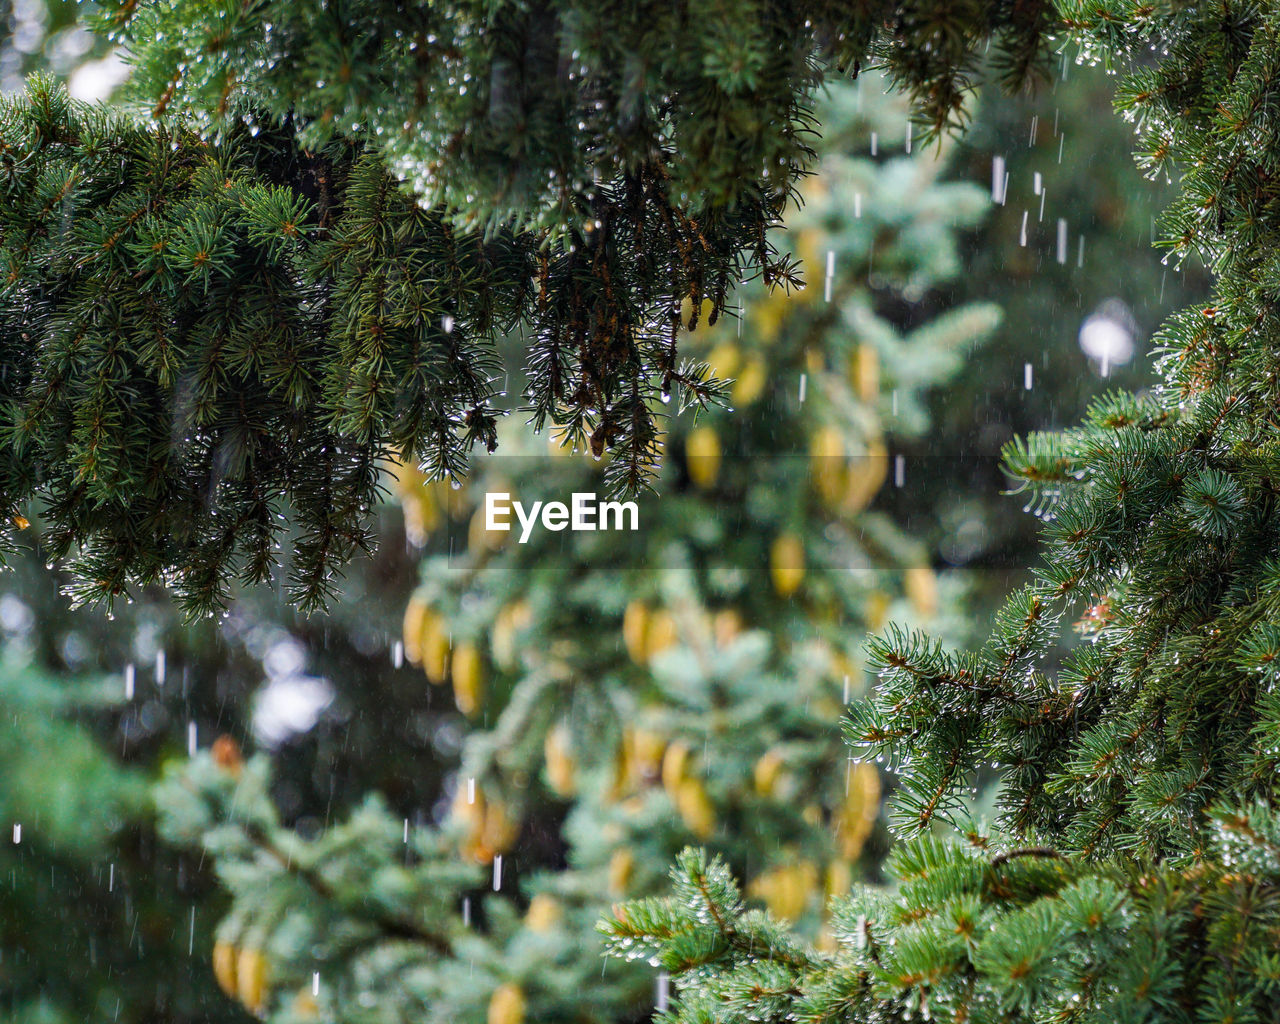 Rain drops falling from pine tree